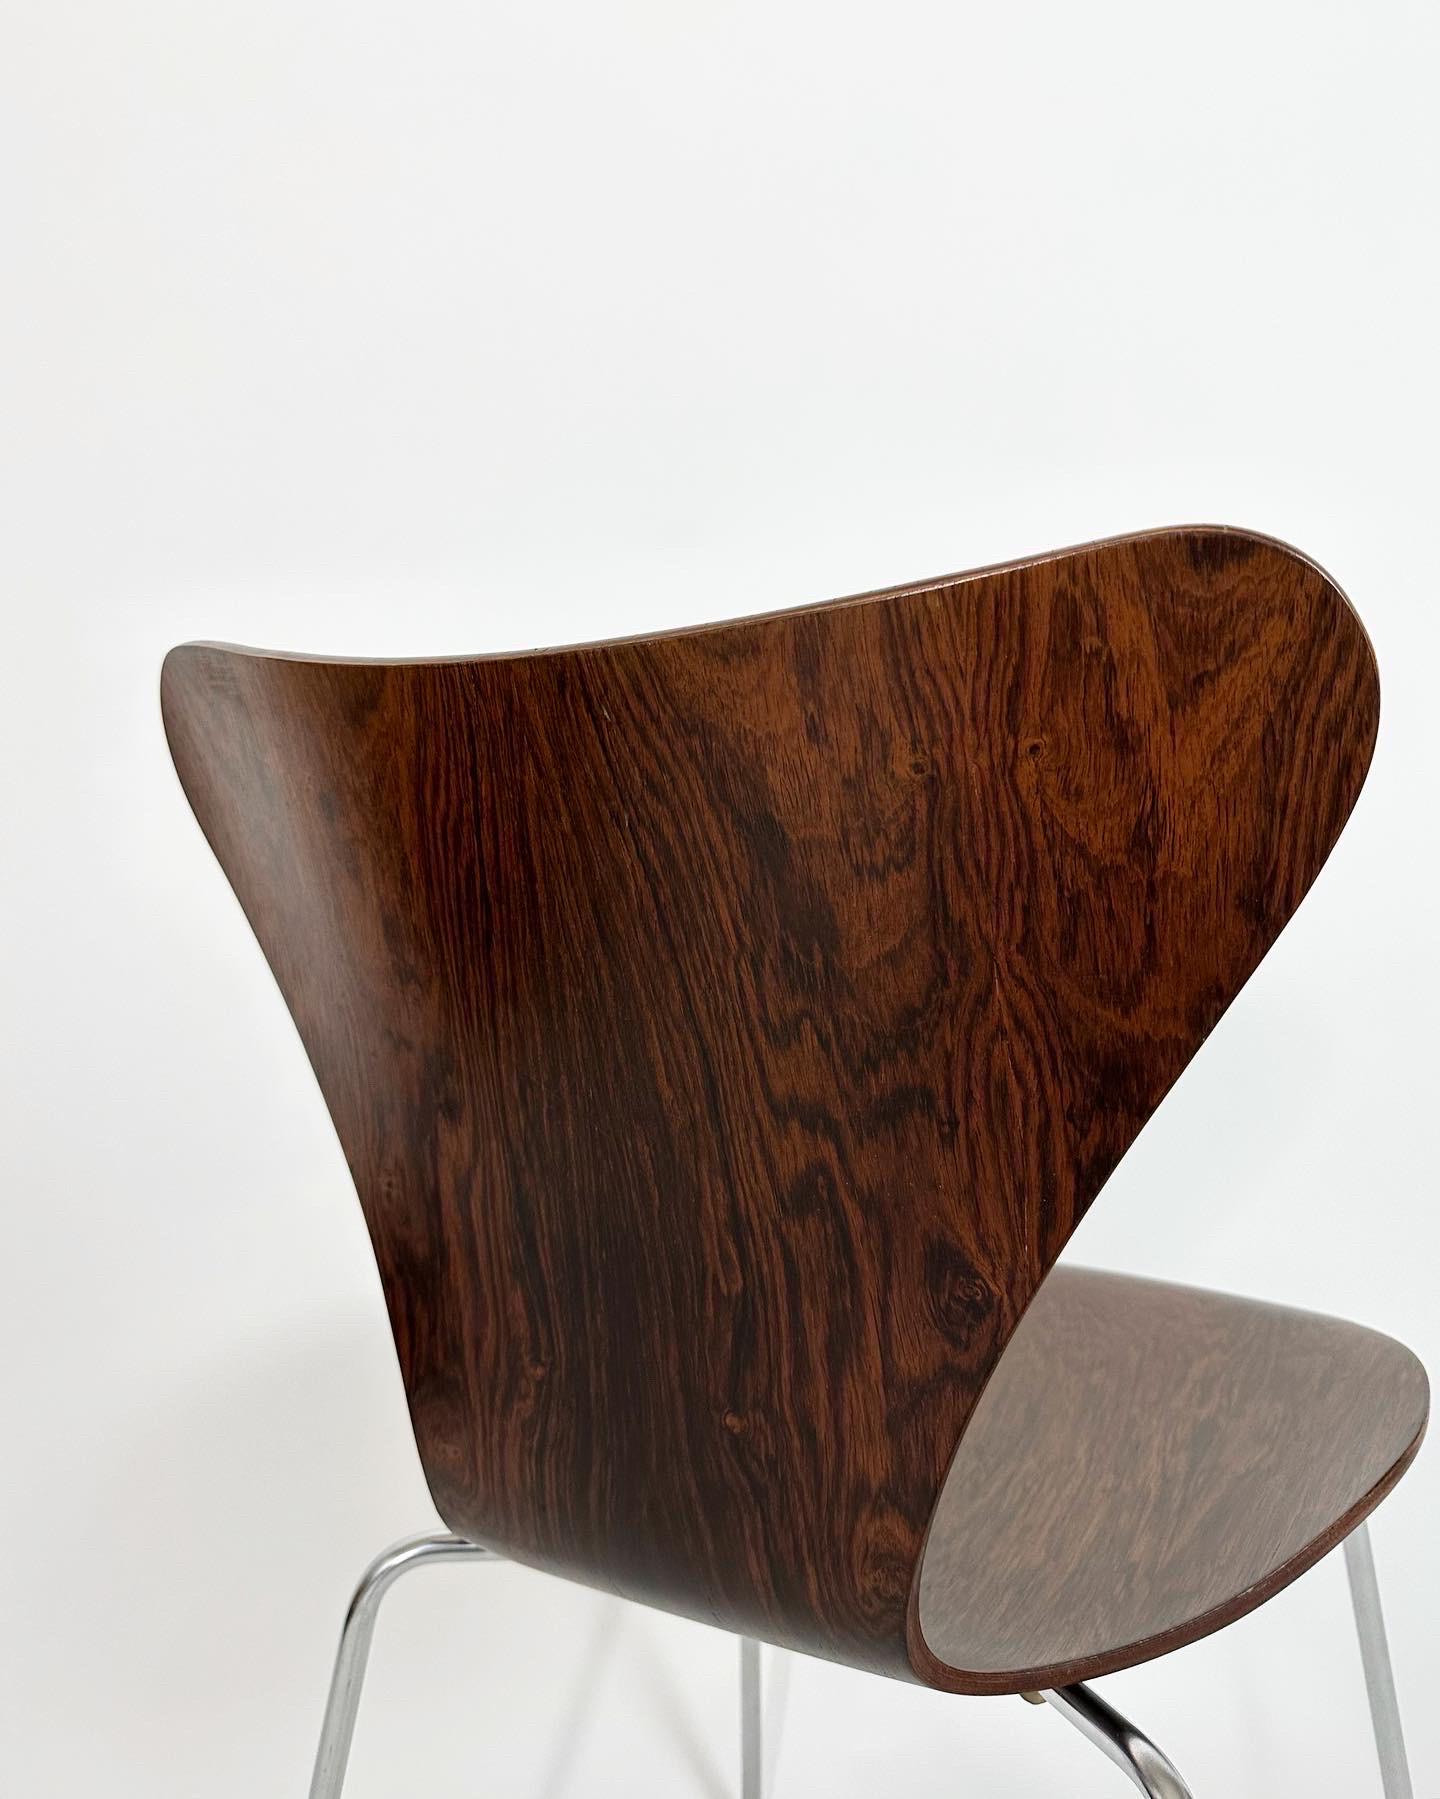 Hand-Crafted Arne Jacobsen Rosewood Chair Series 7 Fritz Hansen Denmark 1968 For Sale